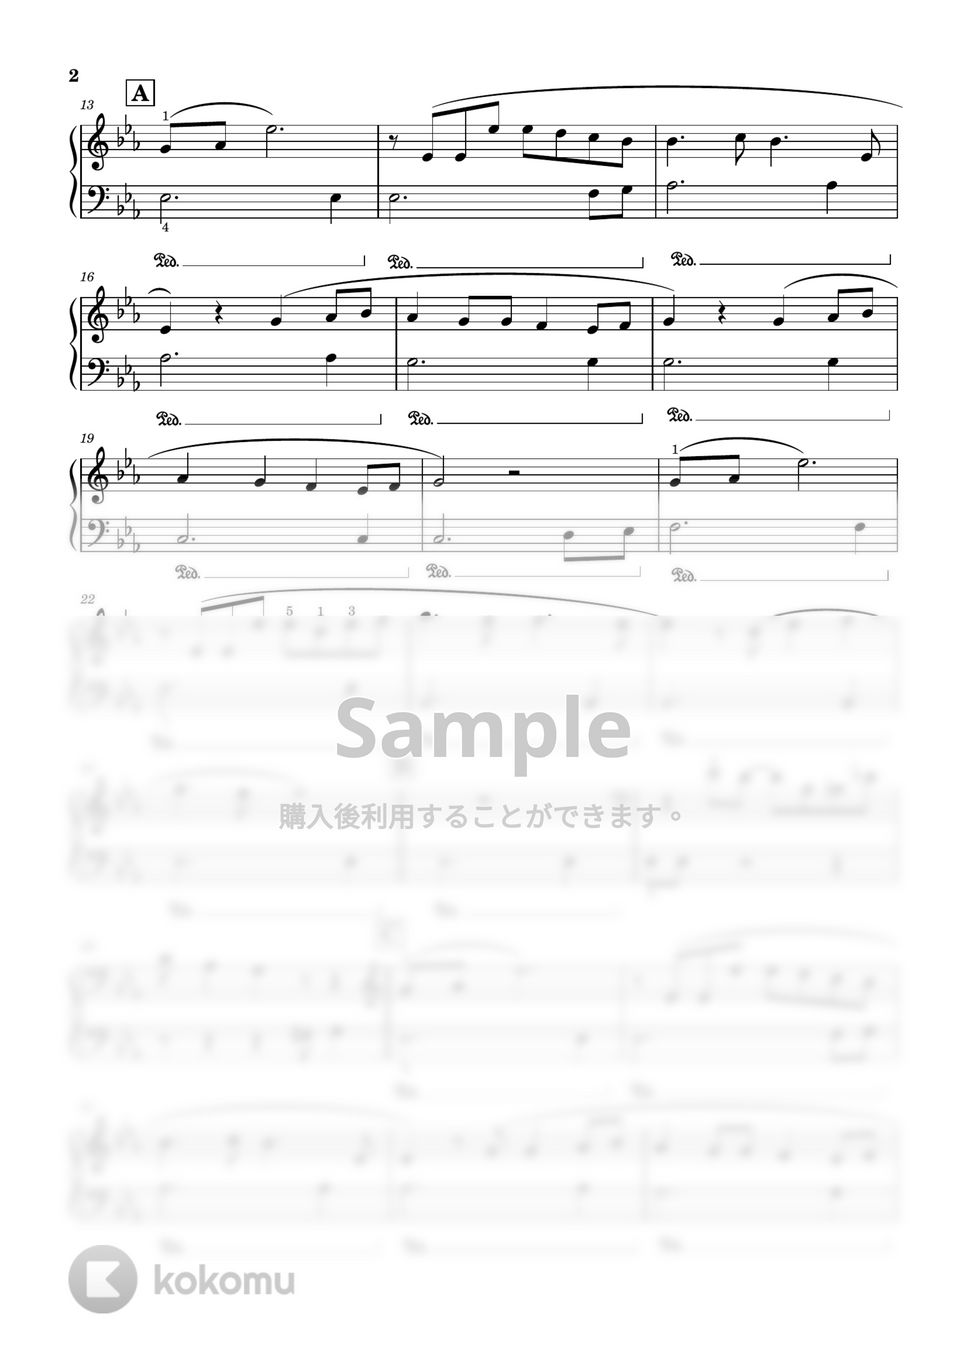 Official髭男dism - ホワイトノイズ (東京リベンジャーズ/初級レベル) by Saori8Piano